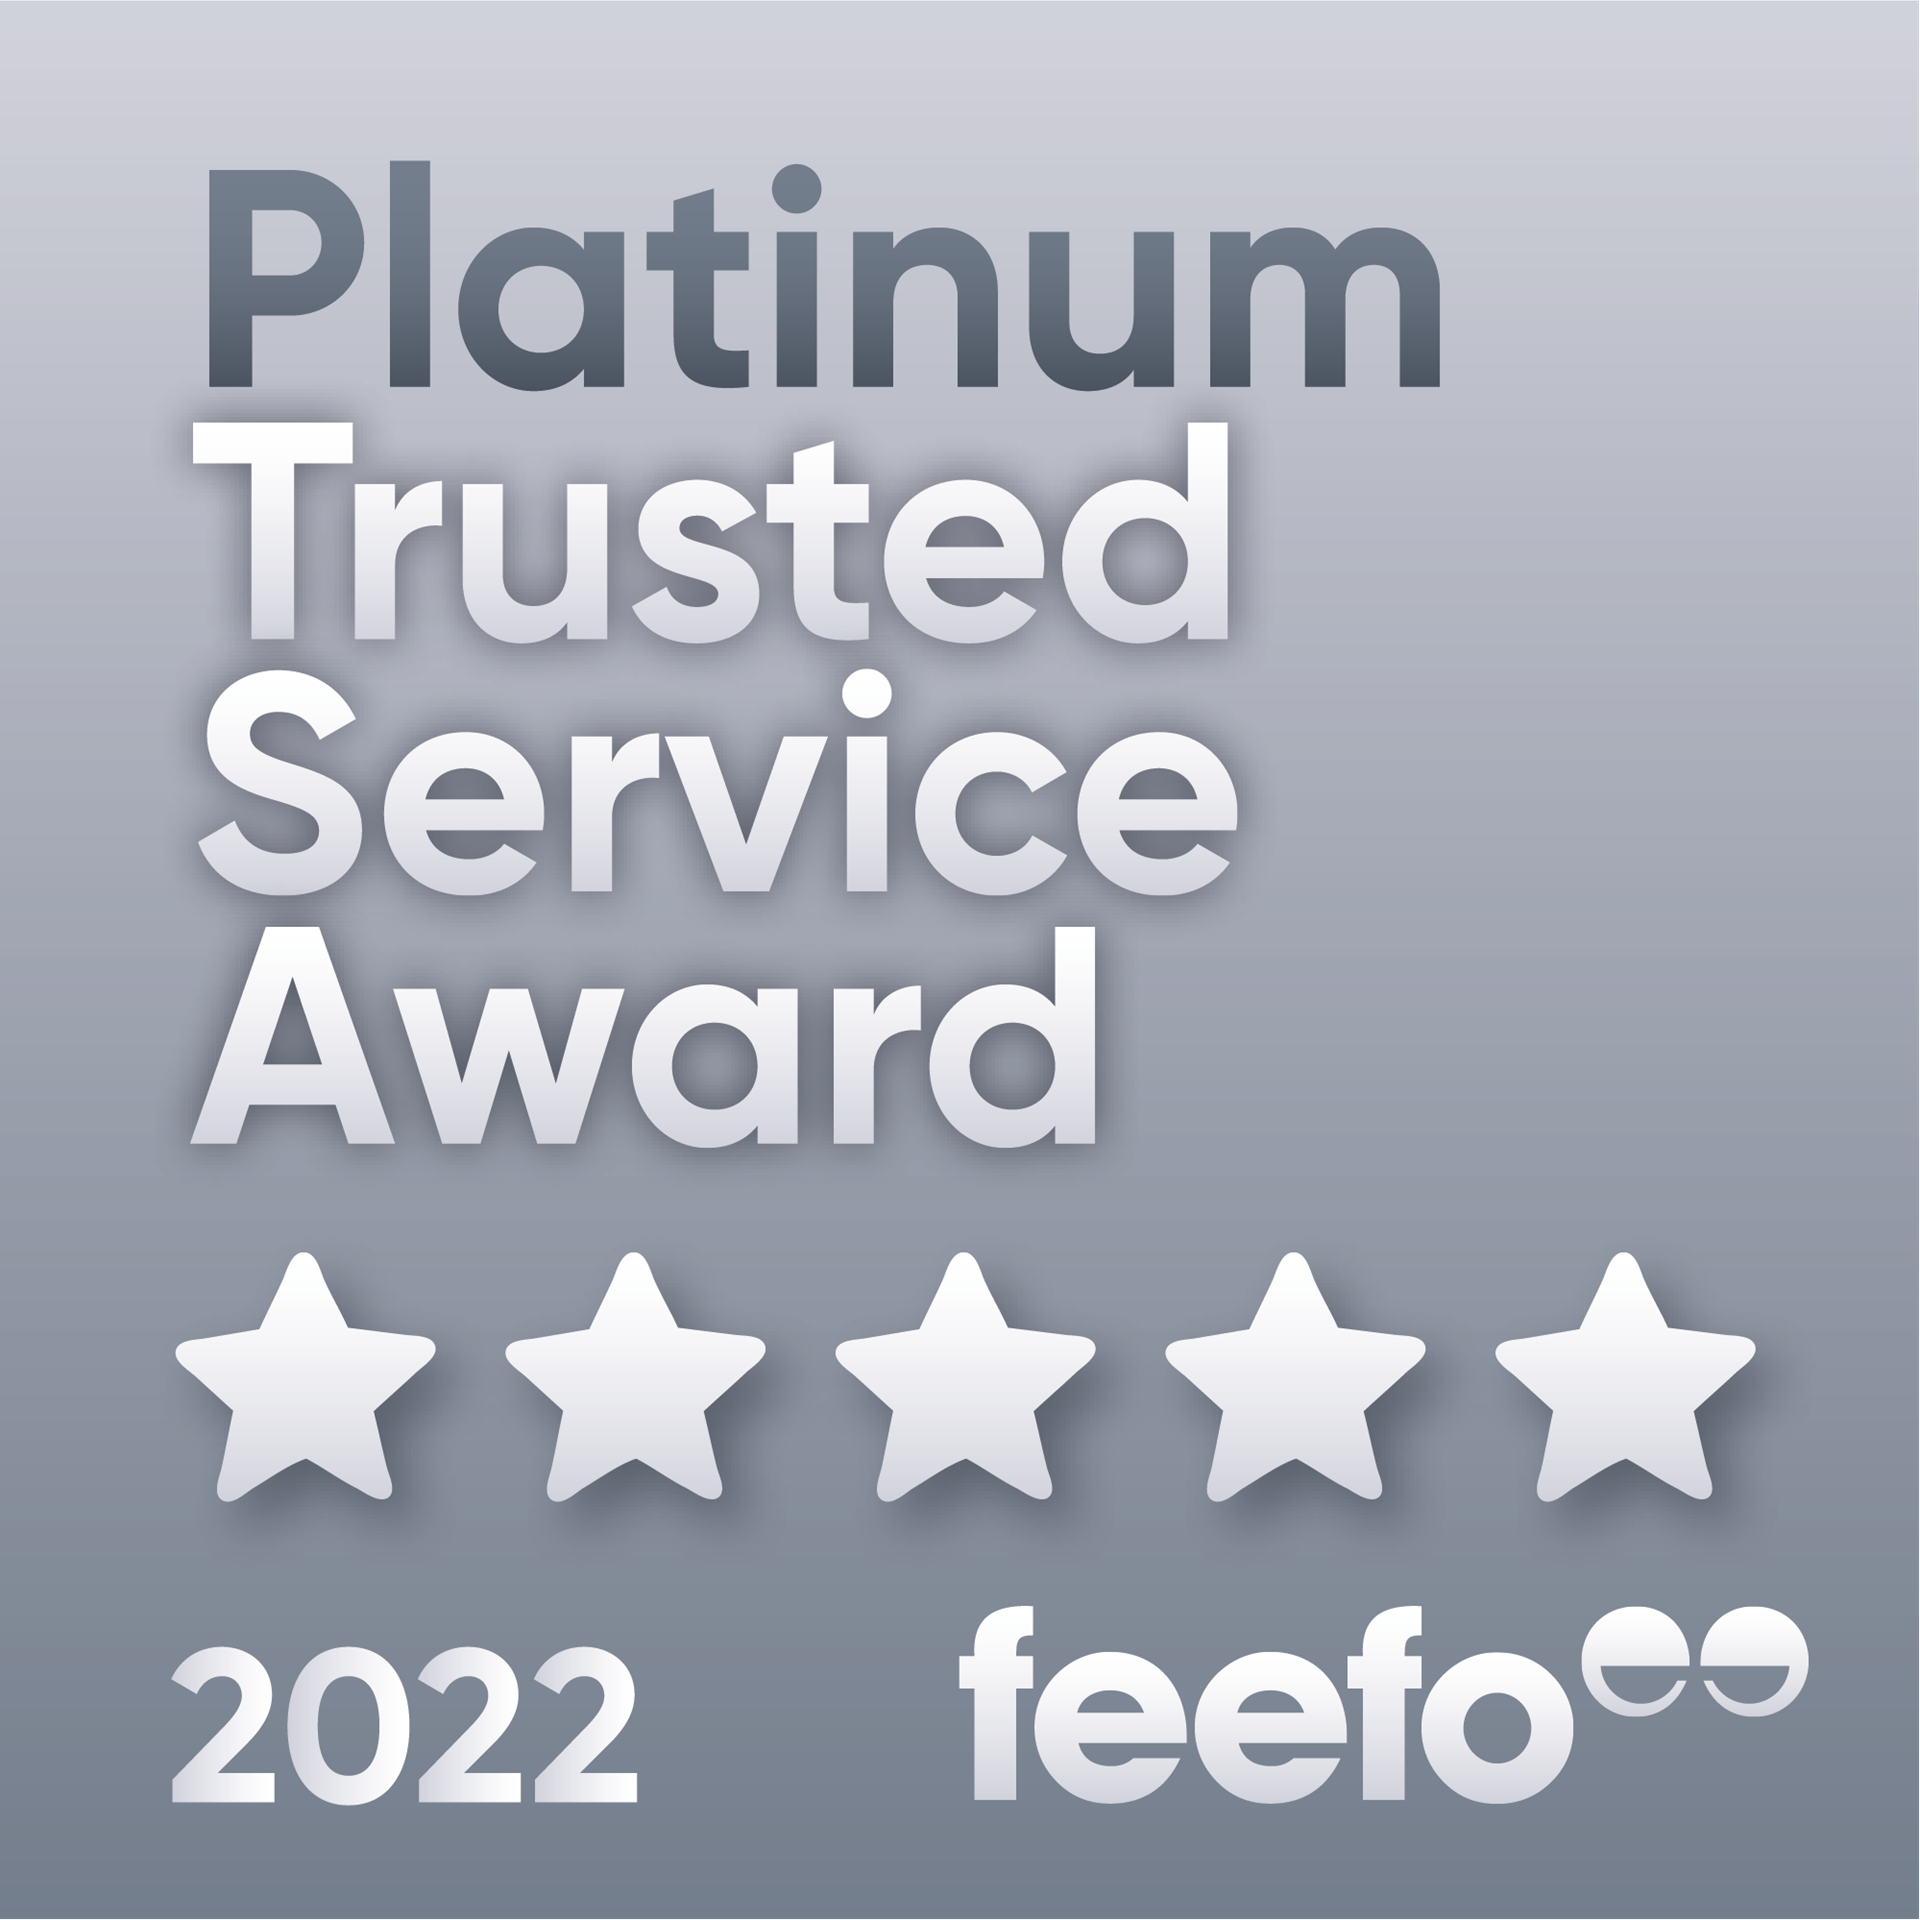 Platinum Trusted Service Award 2022